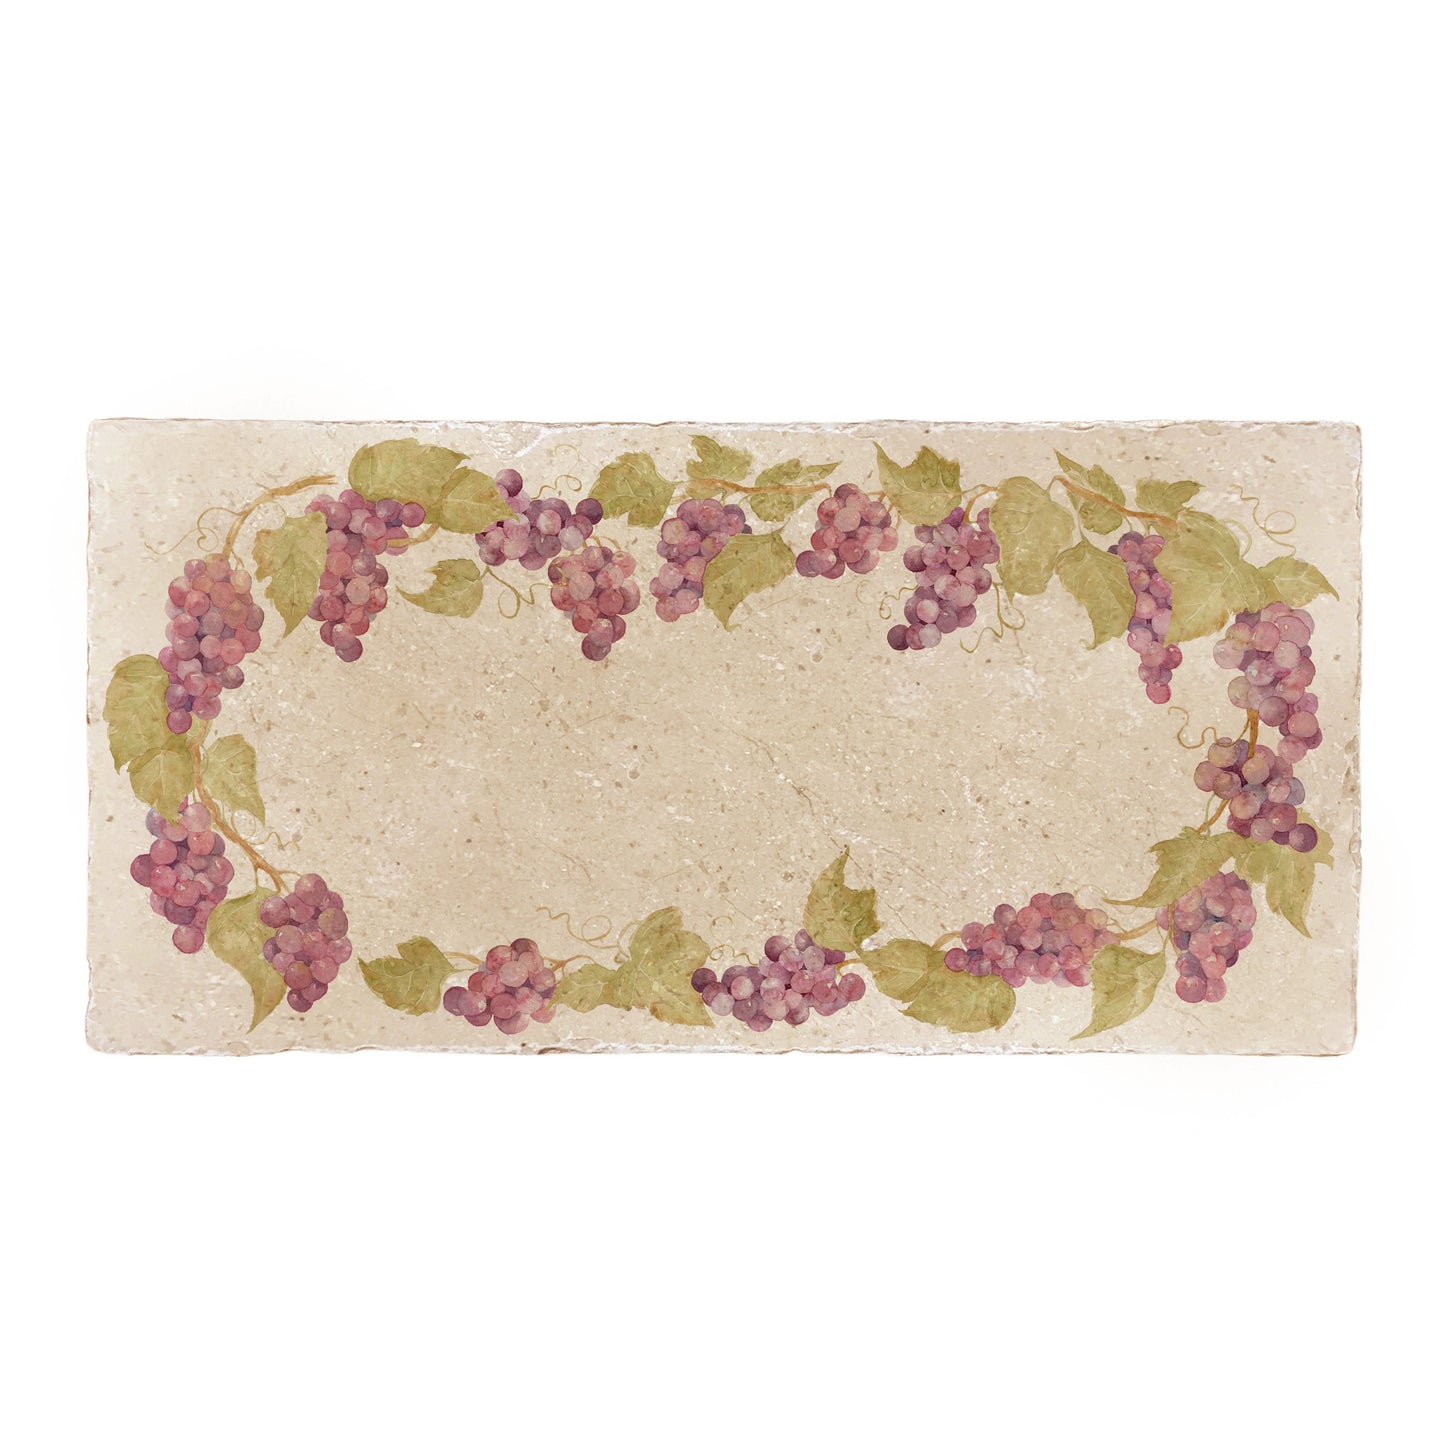 A rectangular marble sharing platter, featuring a watercolour grape vine wreath design that frames the platter.